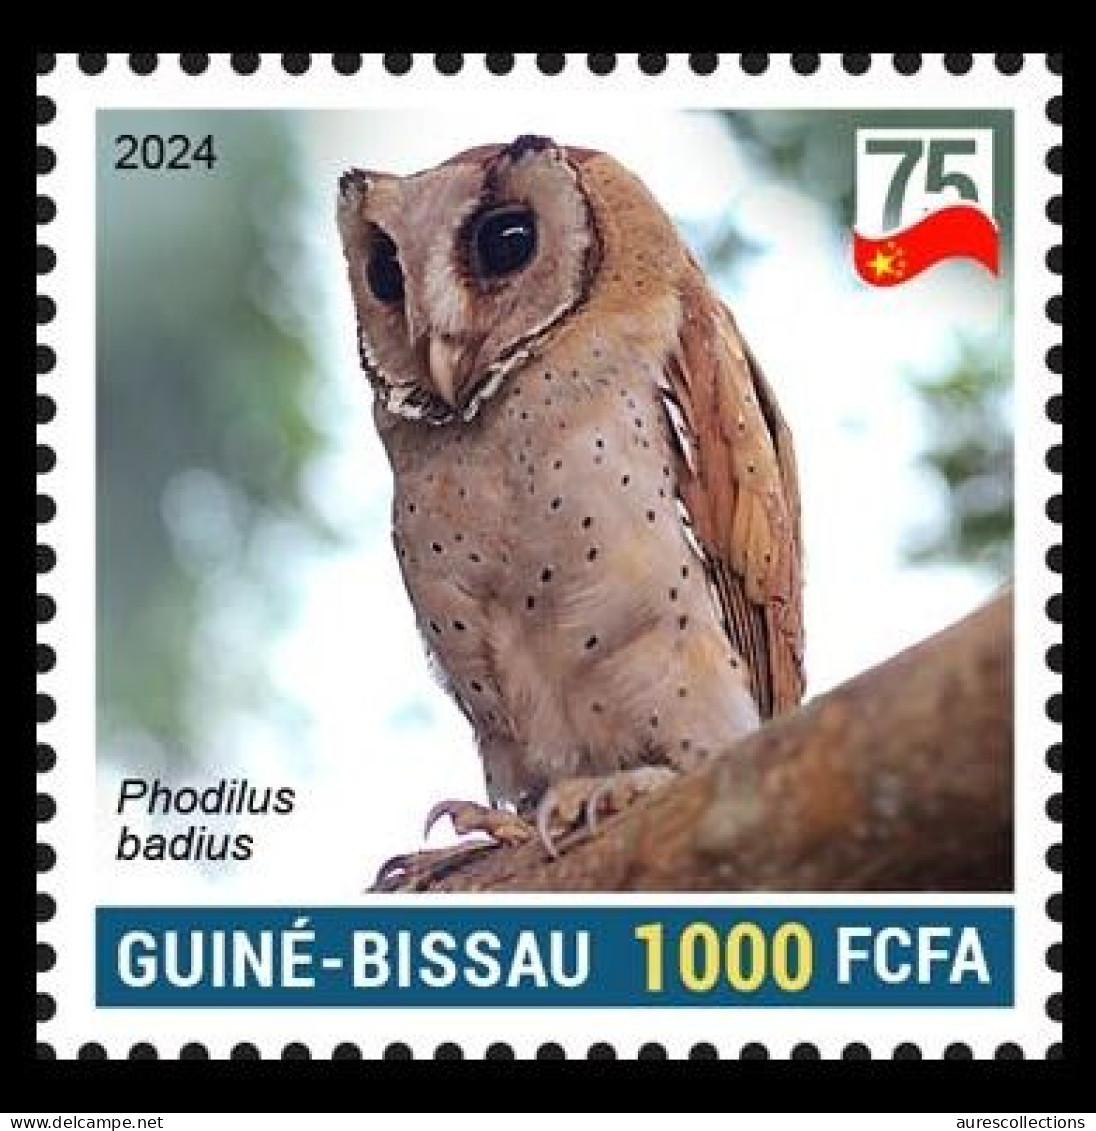 GUINEA BISSAU 2024 STAMP 1V - CHINA BIRDS - SRI LANKA BAY OWL OWLS PHODILE DE CEYLAN - 75 ANNIV. OF CHINA - MNH - Eulenvögel